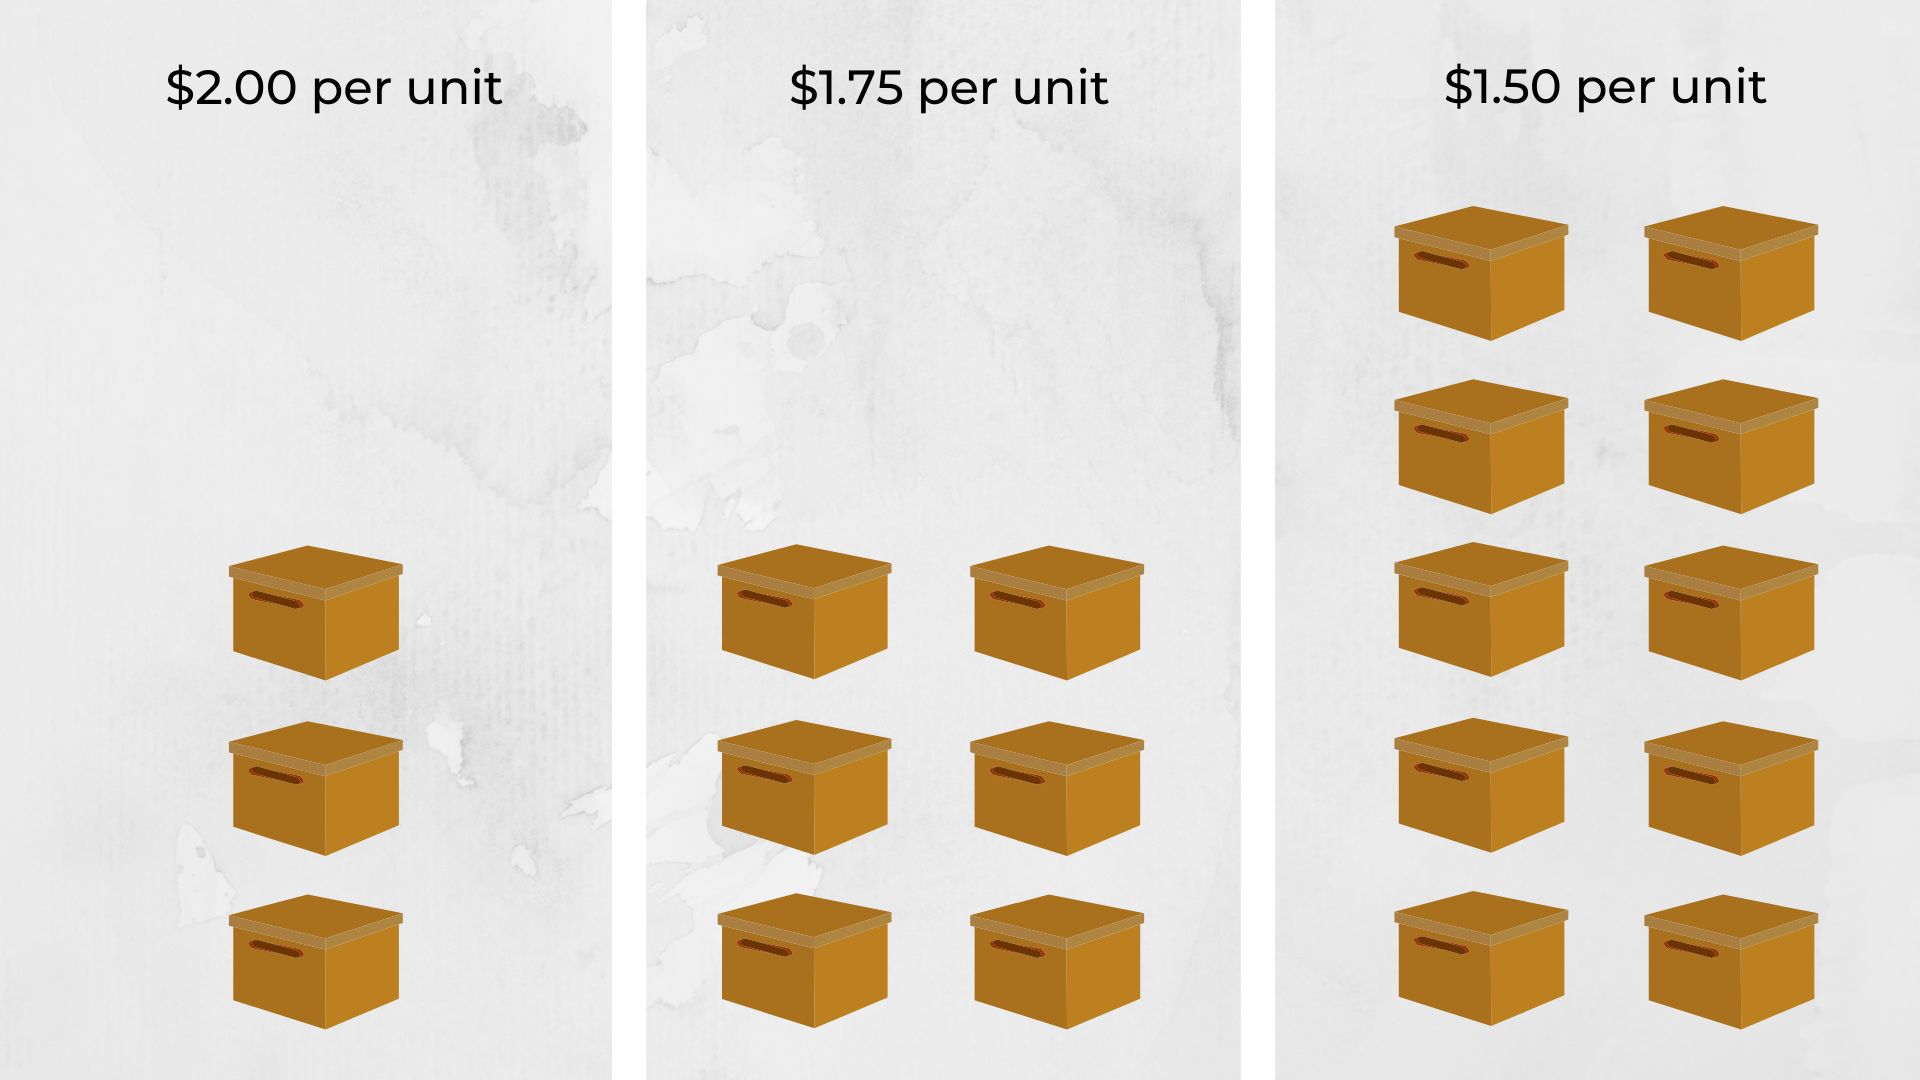 Salesforce CPQ Price per Unit Based on Quantity